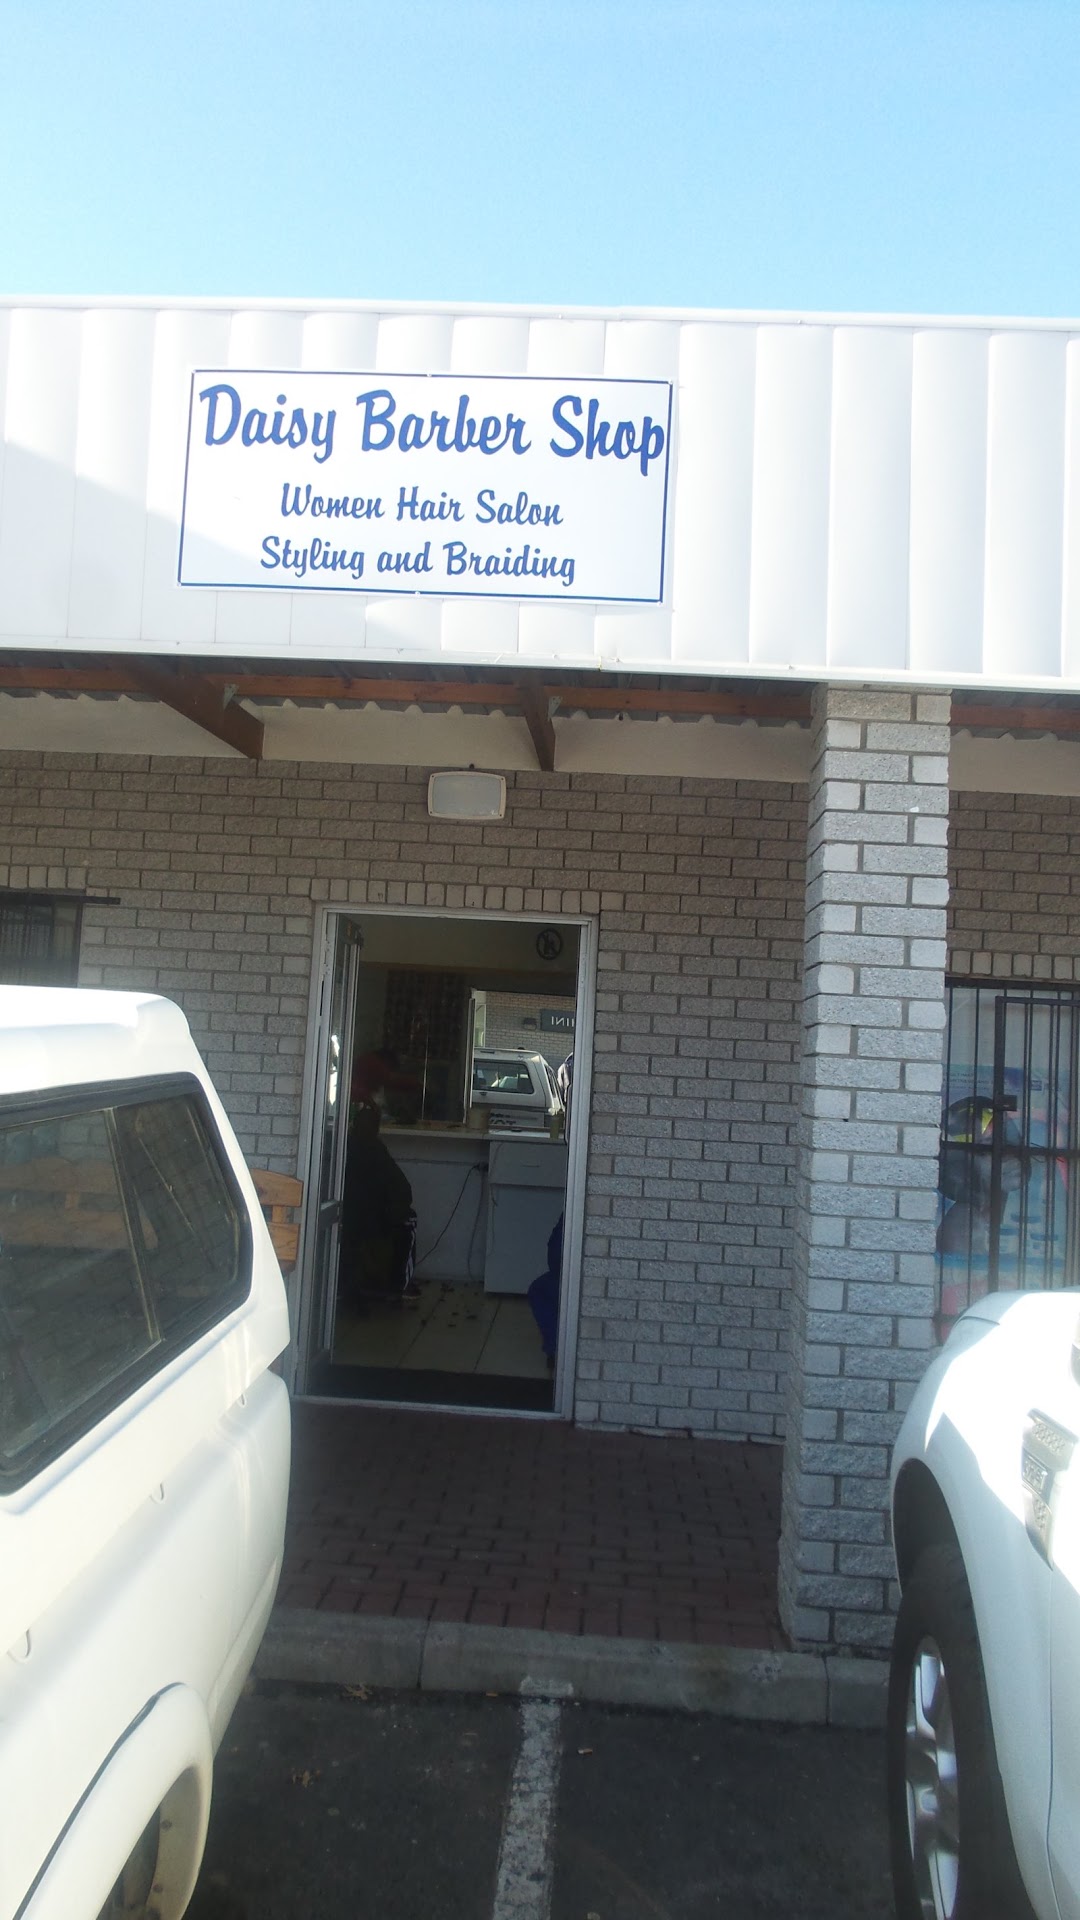 Daisy Barber Shop